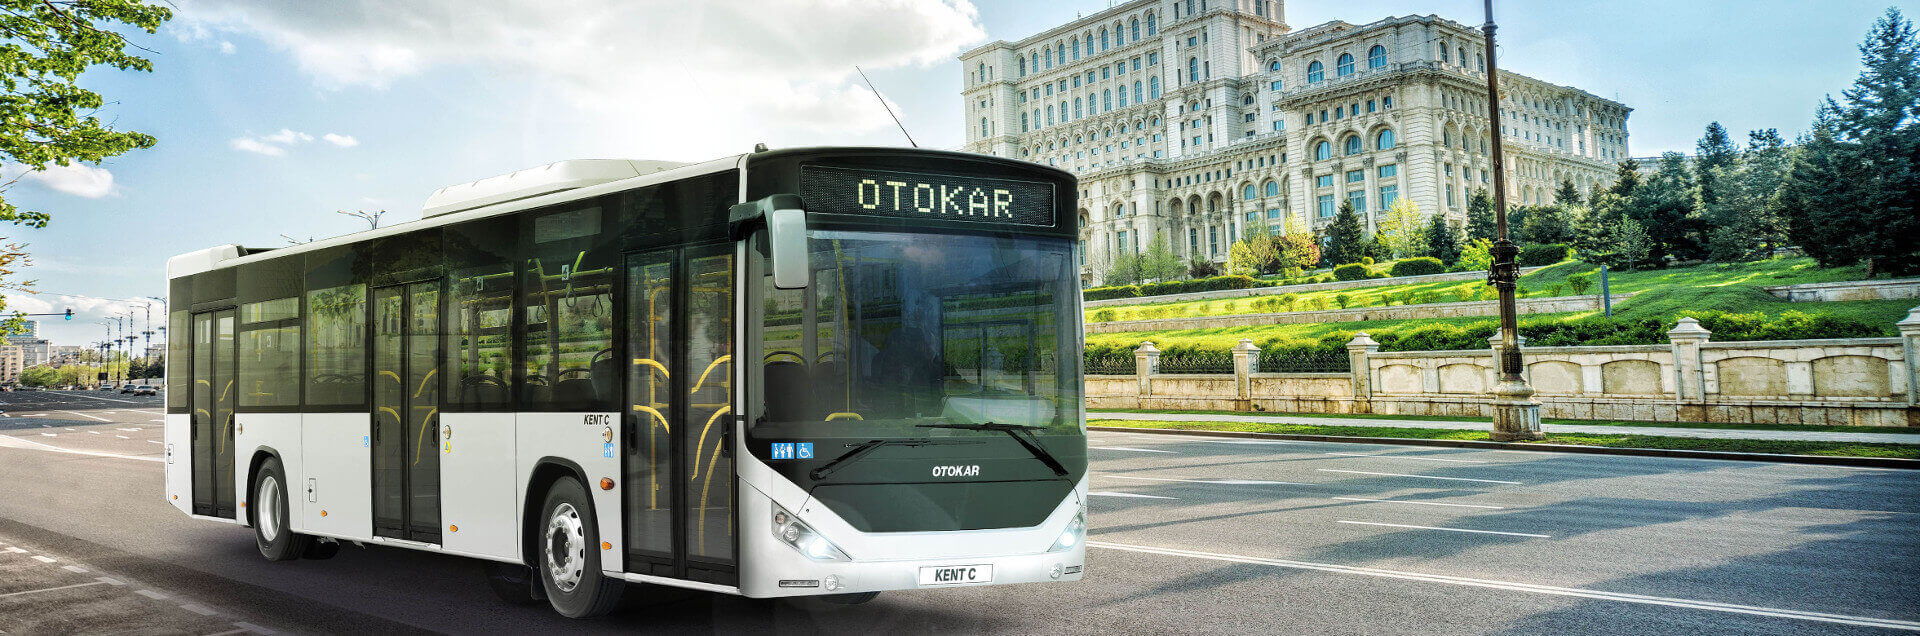 Otokar’dan Romanya’ya doğal gazlı otobüs ihracatı